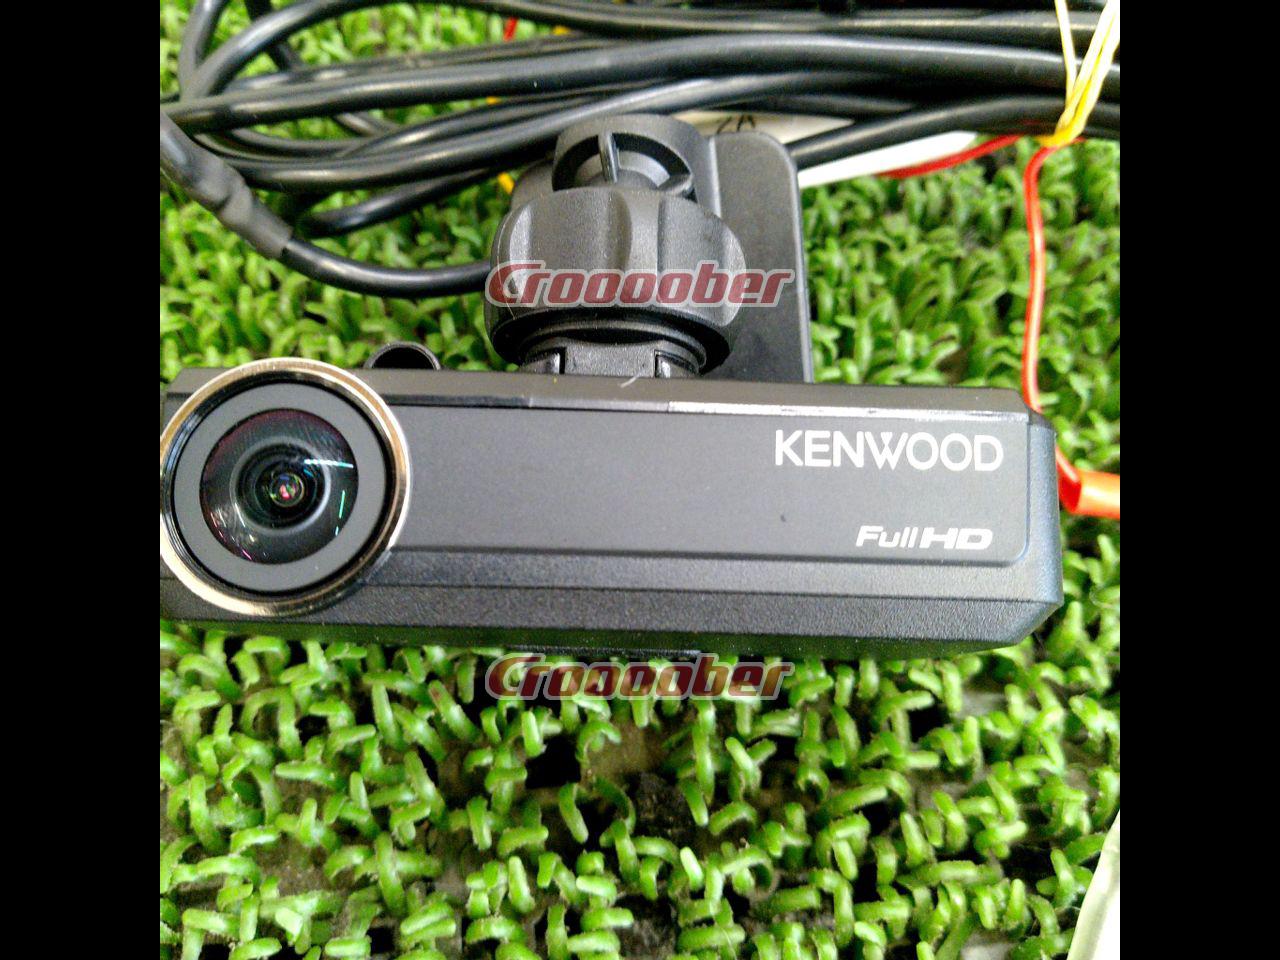 KENWOOD(ケンウッド)DRV-N530 【フロント/リアカメラと彩速ナビが連携